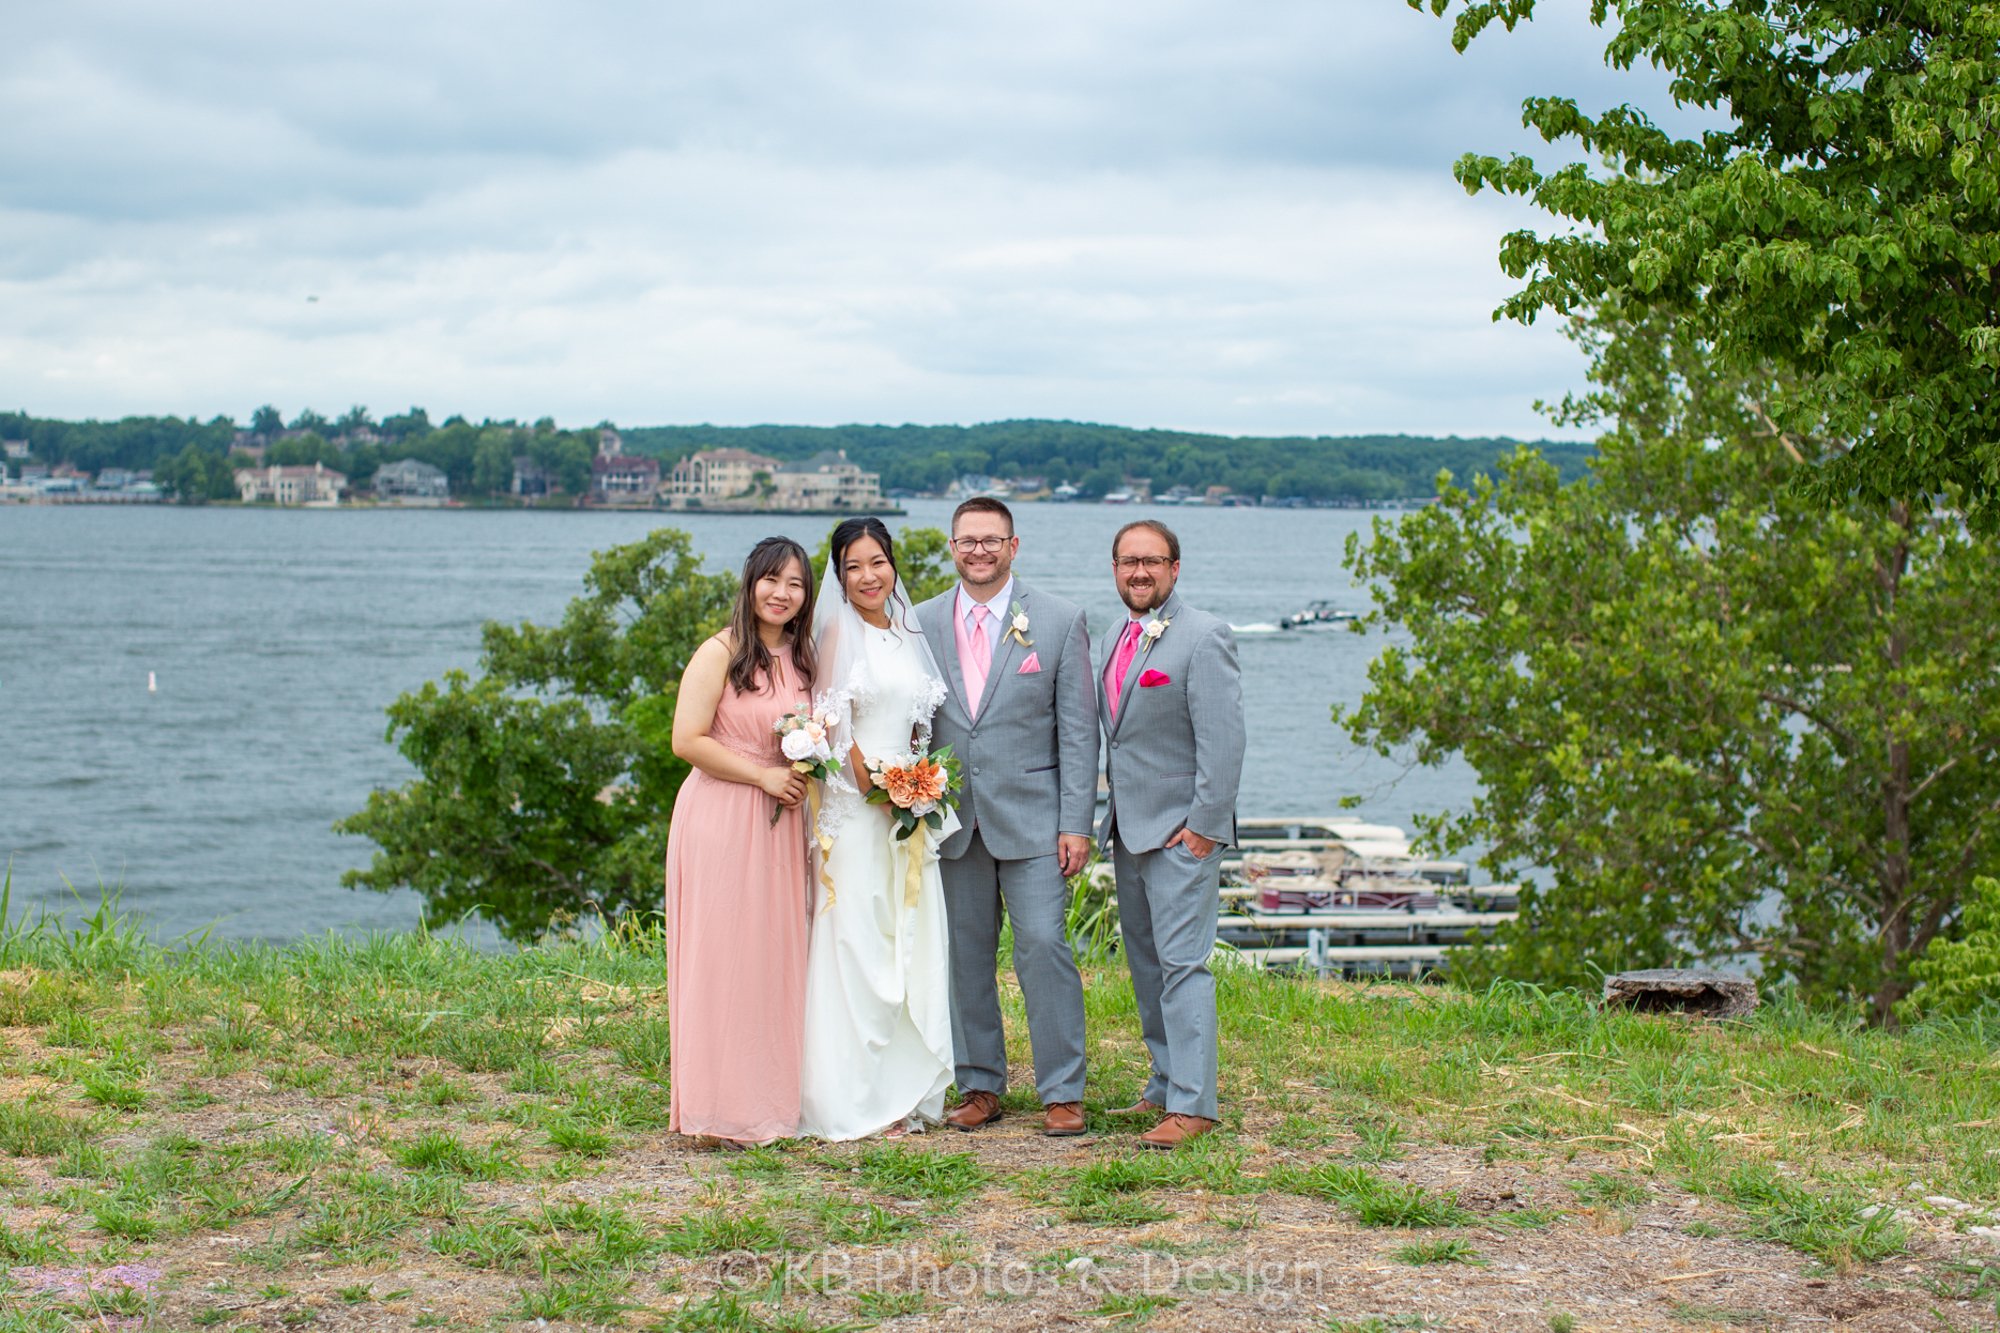 Wedding-Destination-Photography-Lake-of-the-Ozarks-Missouri-Nick_Irene-Jefferson-City-bride-groom-Lodge-of-Four-Seasons-wedding-photographer-KB-Photos-and-Design-293-2.jpg